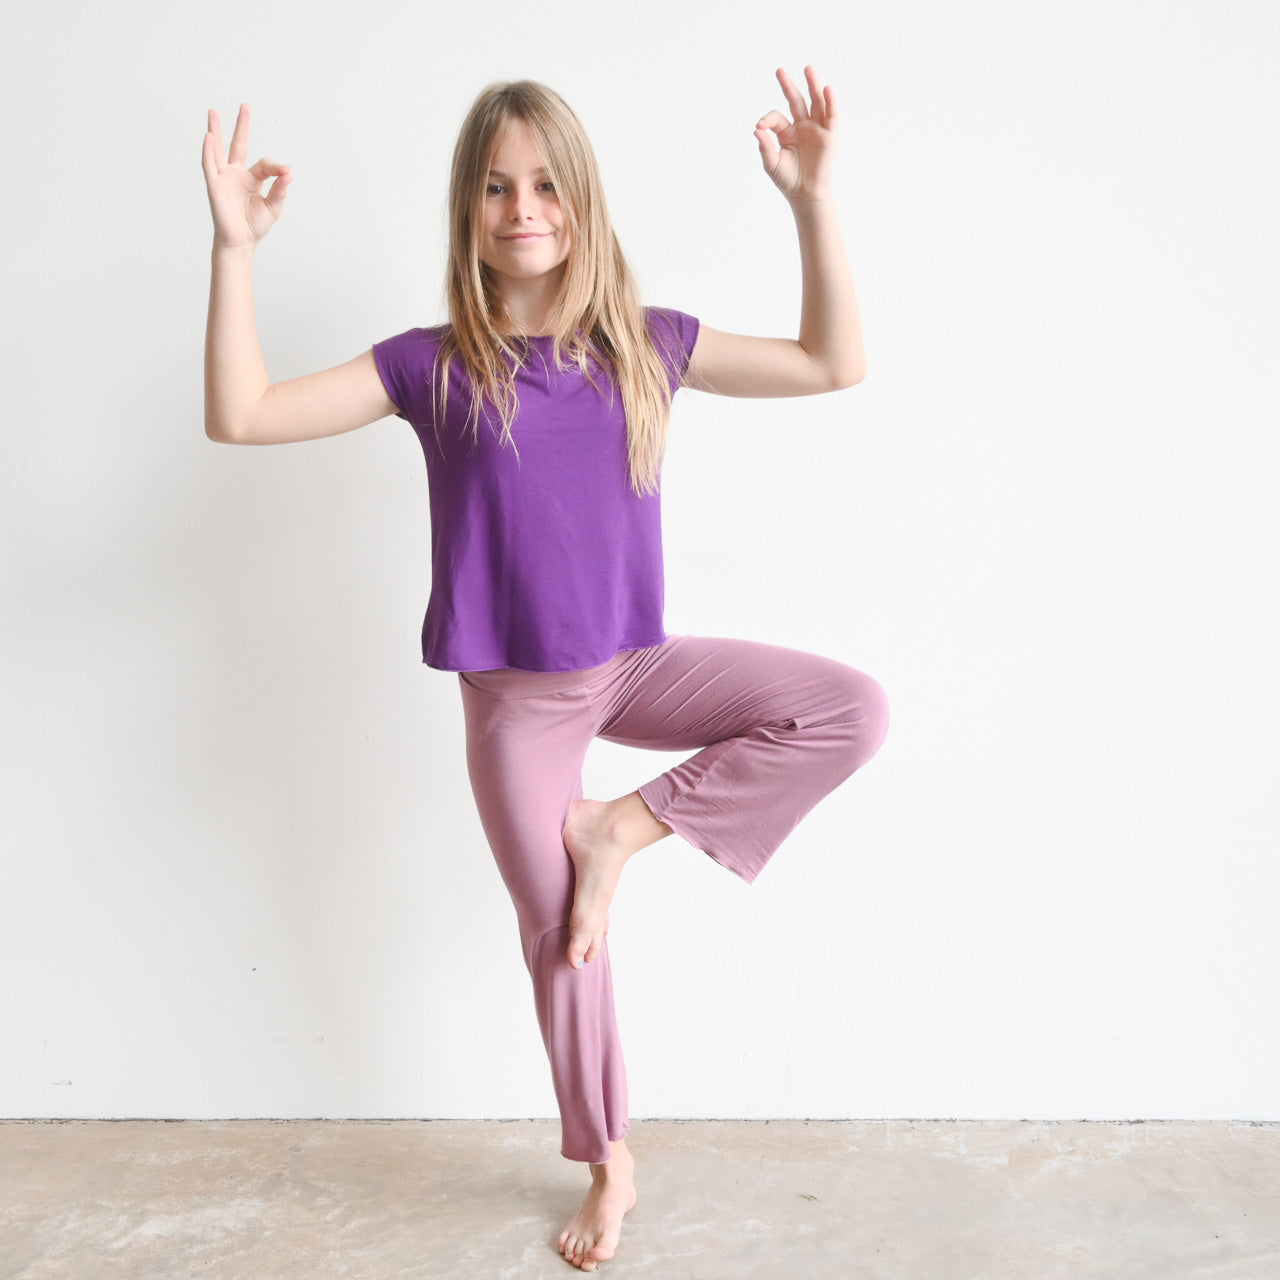 Reasons why women wear yoga pants | Clovia blog